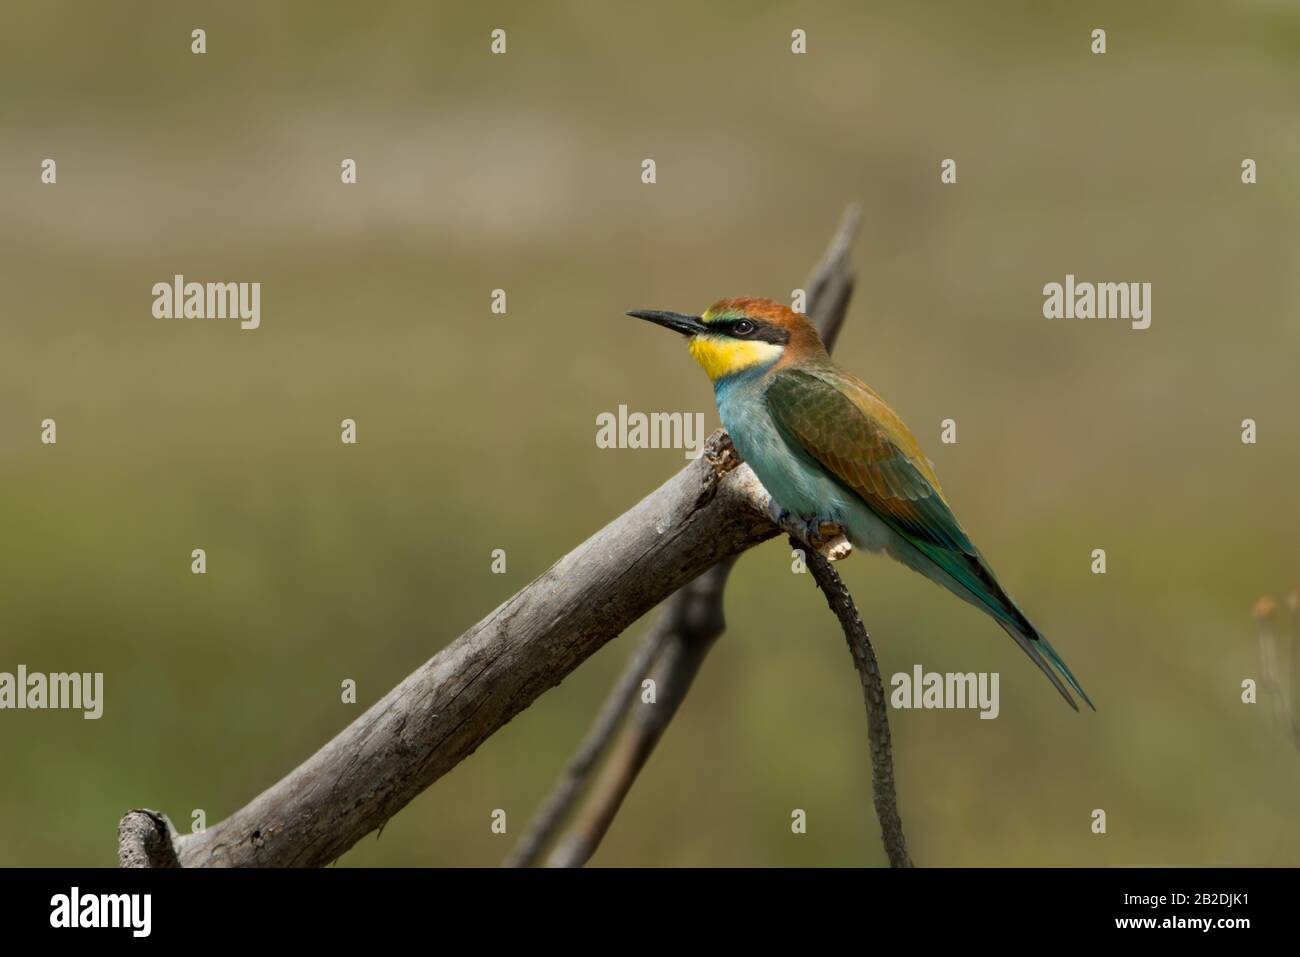 Charmante bunte vögel -Fotos und -Bildmaterial in hoher Auflösung – Alamy